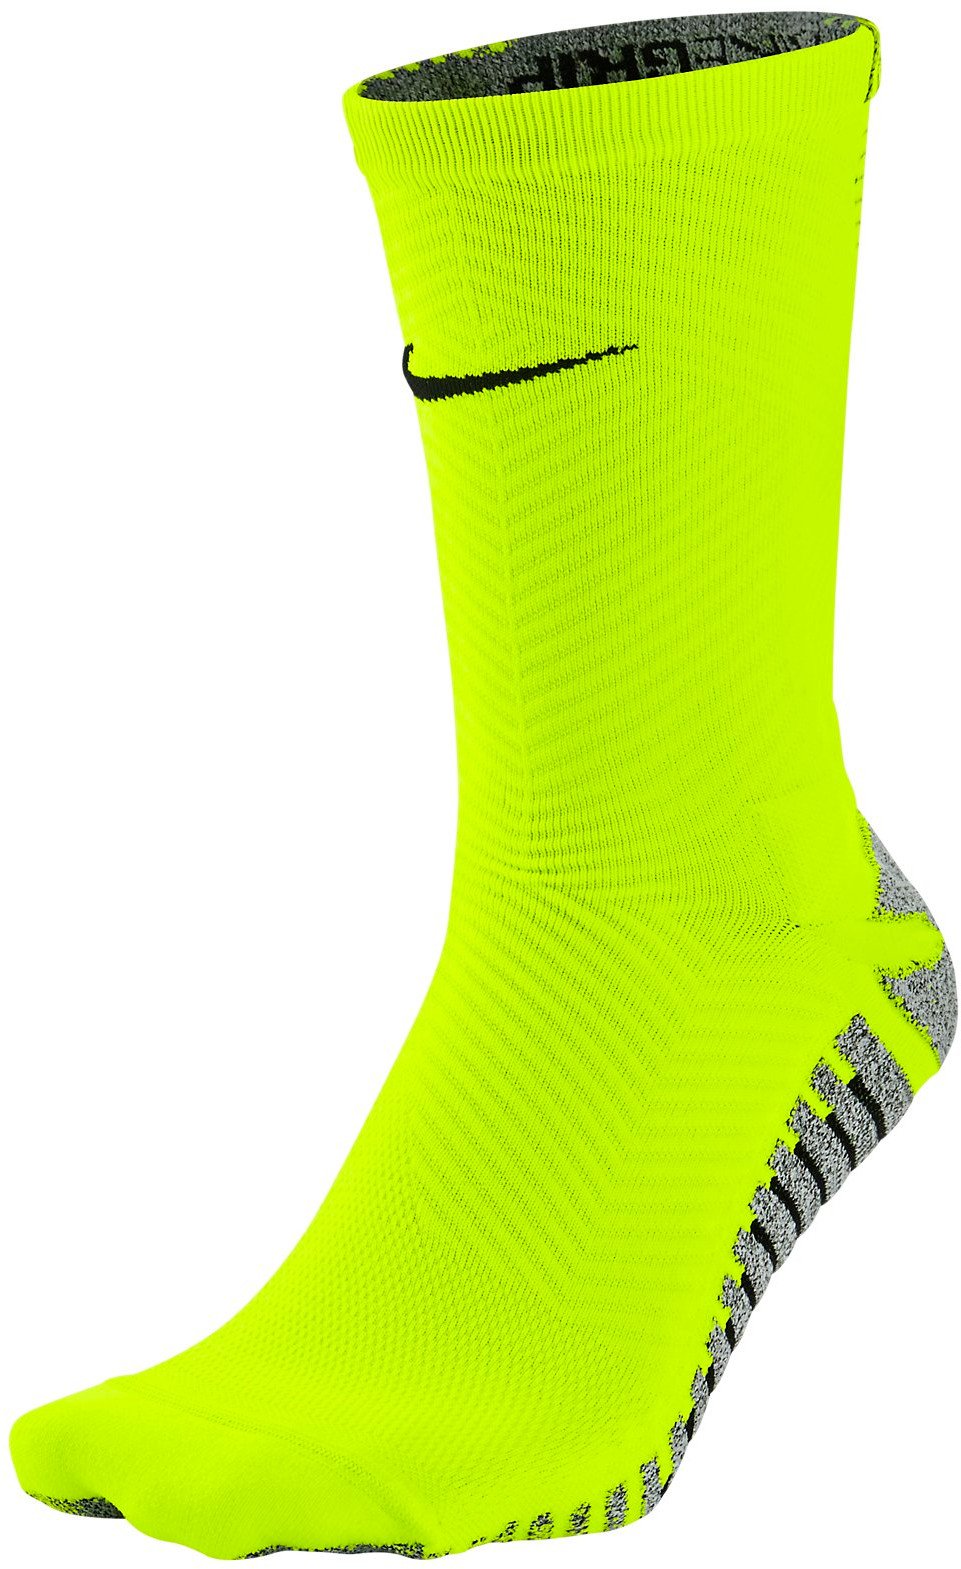 Socks Nike GRIP STRIKE LIGHT CREW